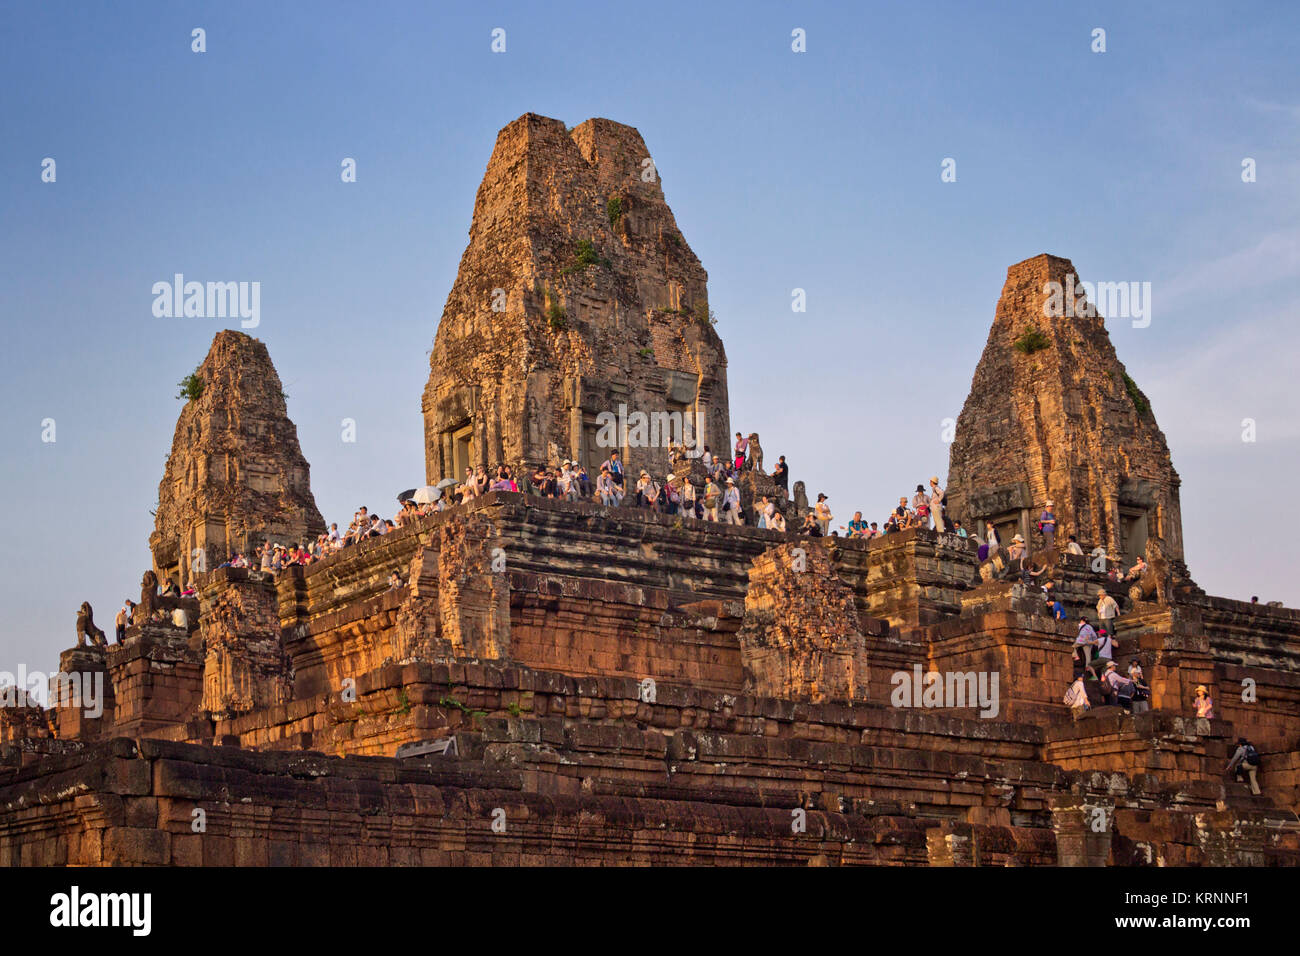 Tempel Pre Rup bei Sonnenuntergang, touristische Menschenmenge, Angkor Wat, Kambodscha, Asien, Stockfoto